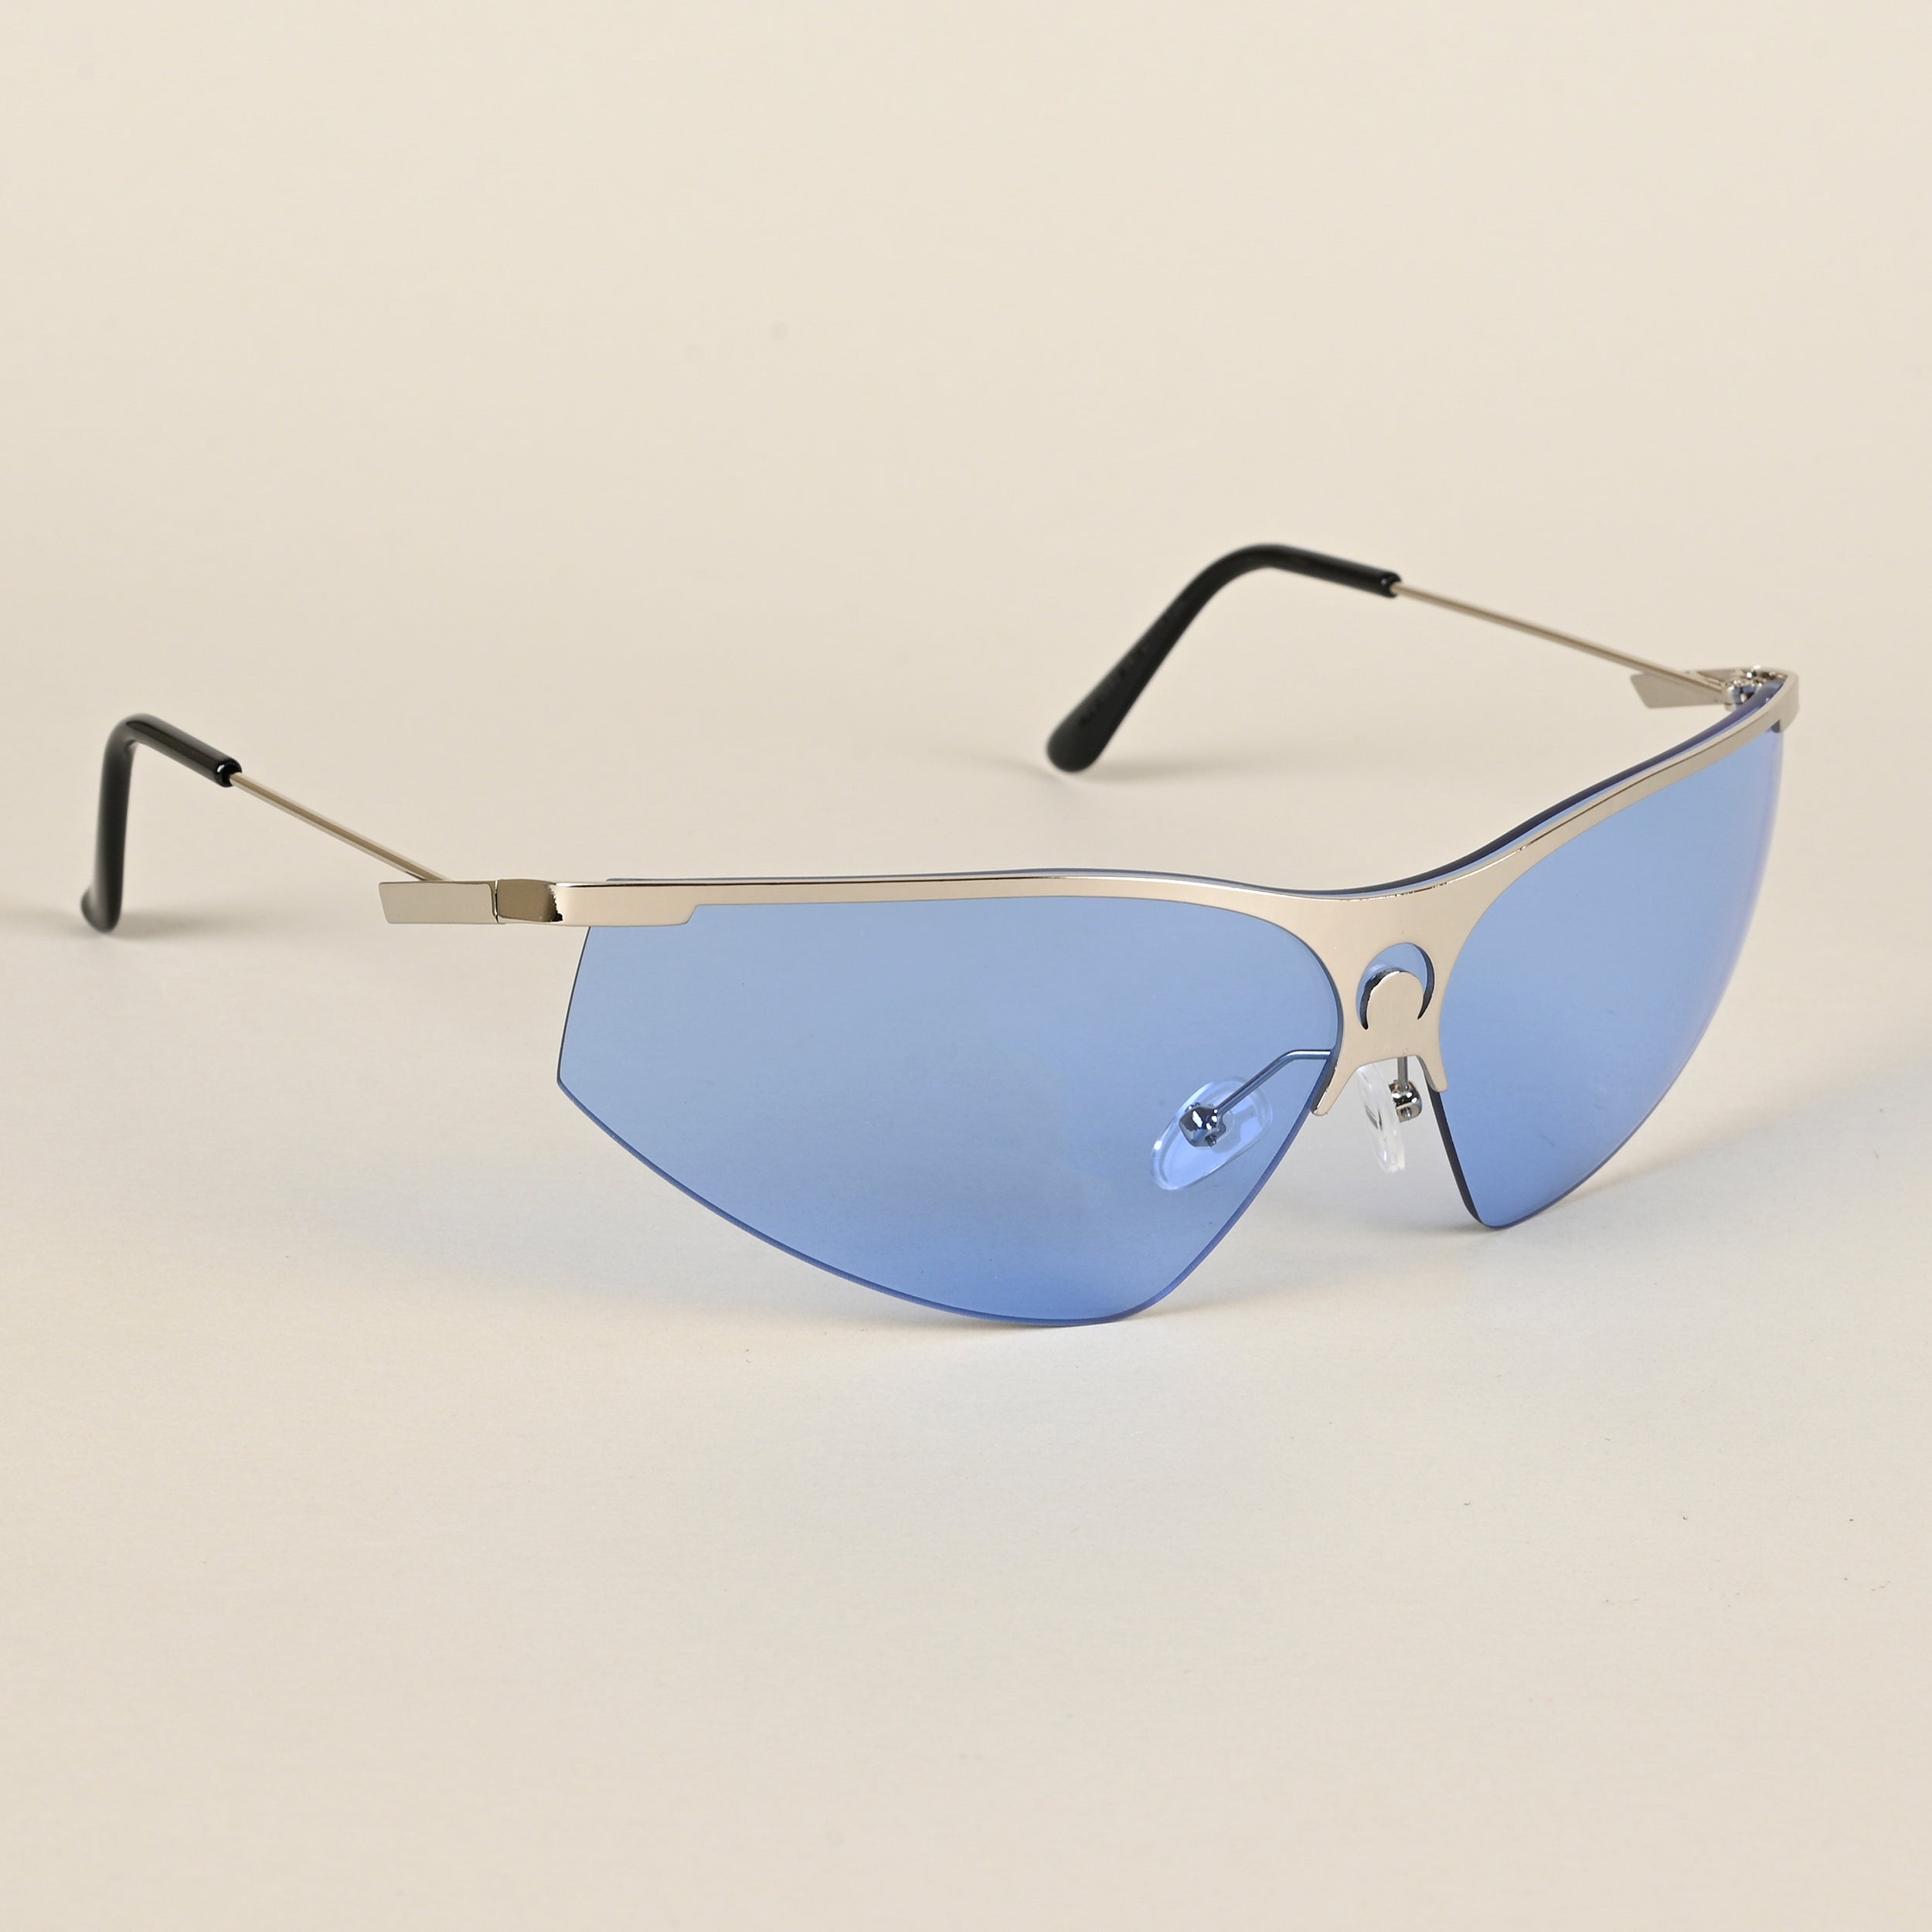 Voyage Blue Wrap-Around Sunglasses for Men & Women - MG4222